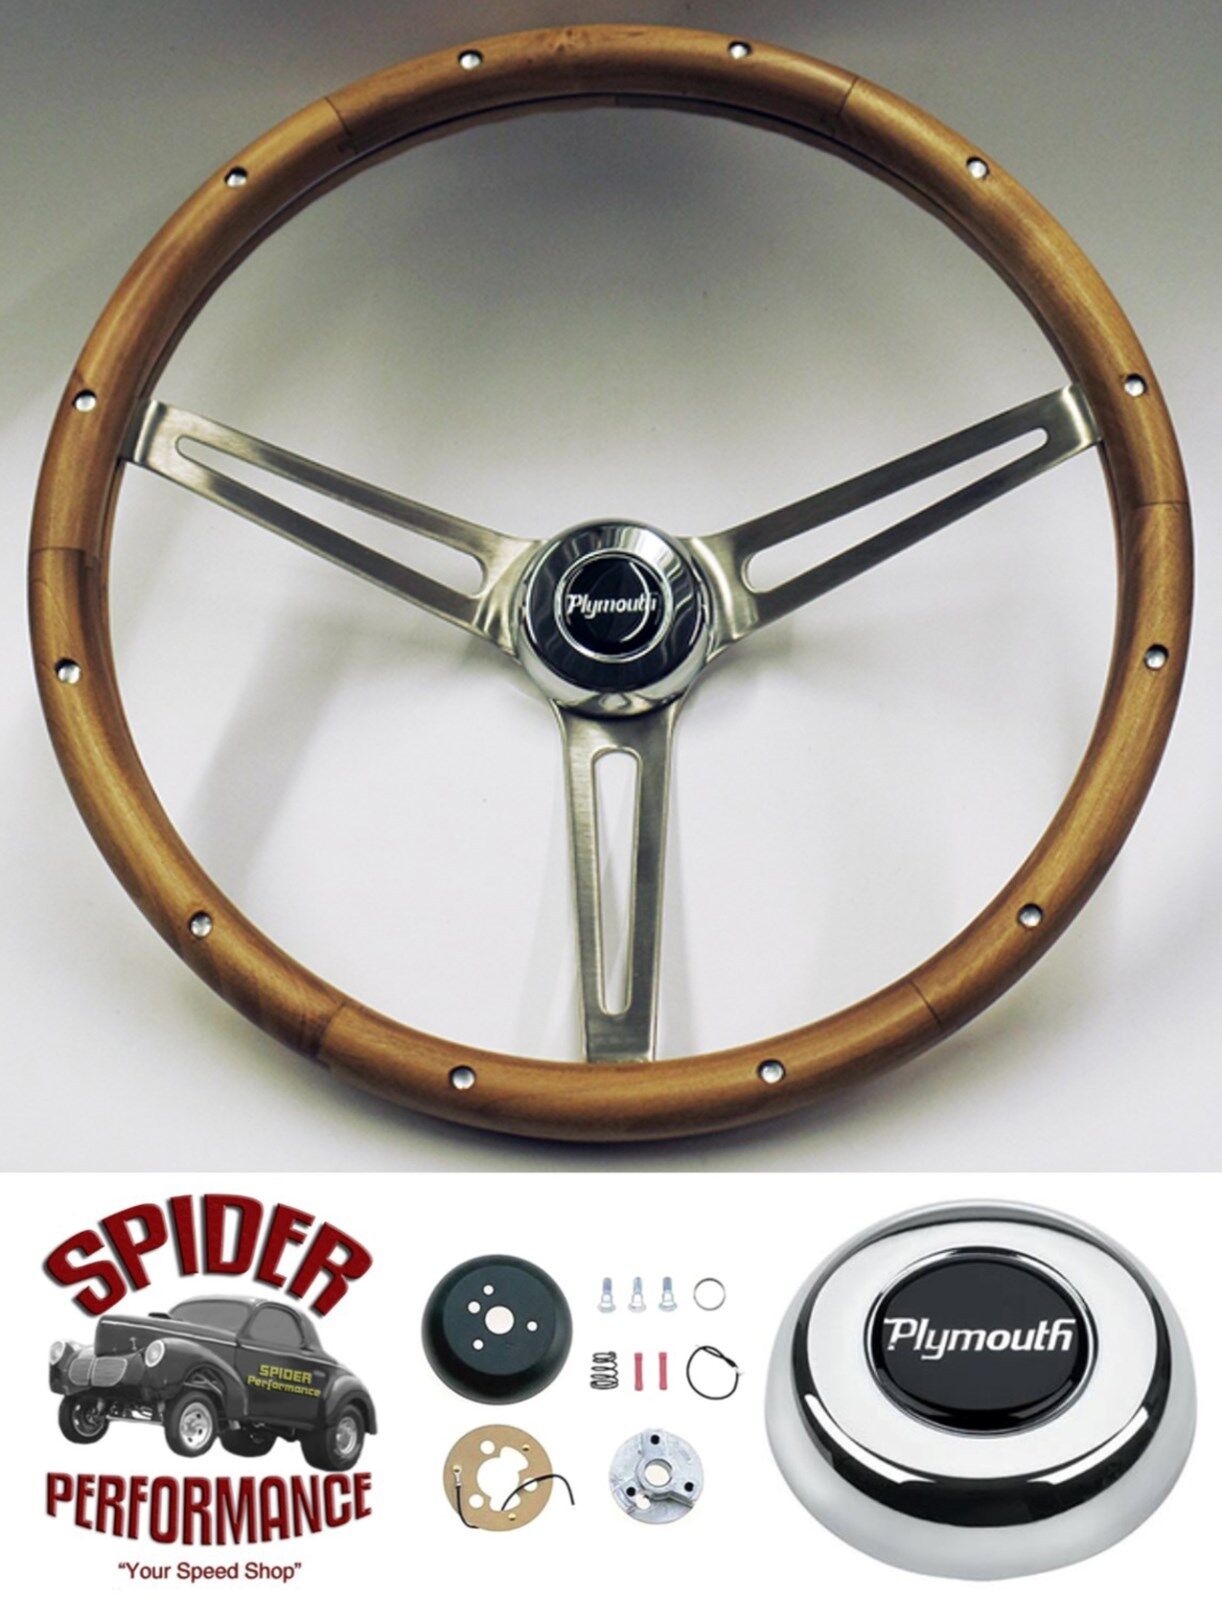 1961-1966 Plymouth steering wheel 15